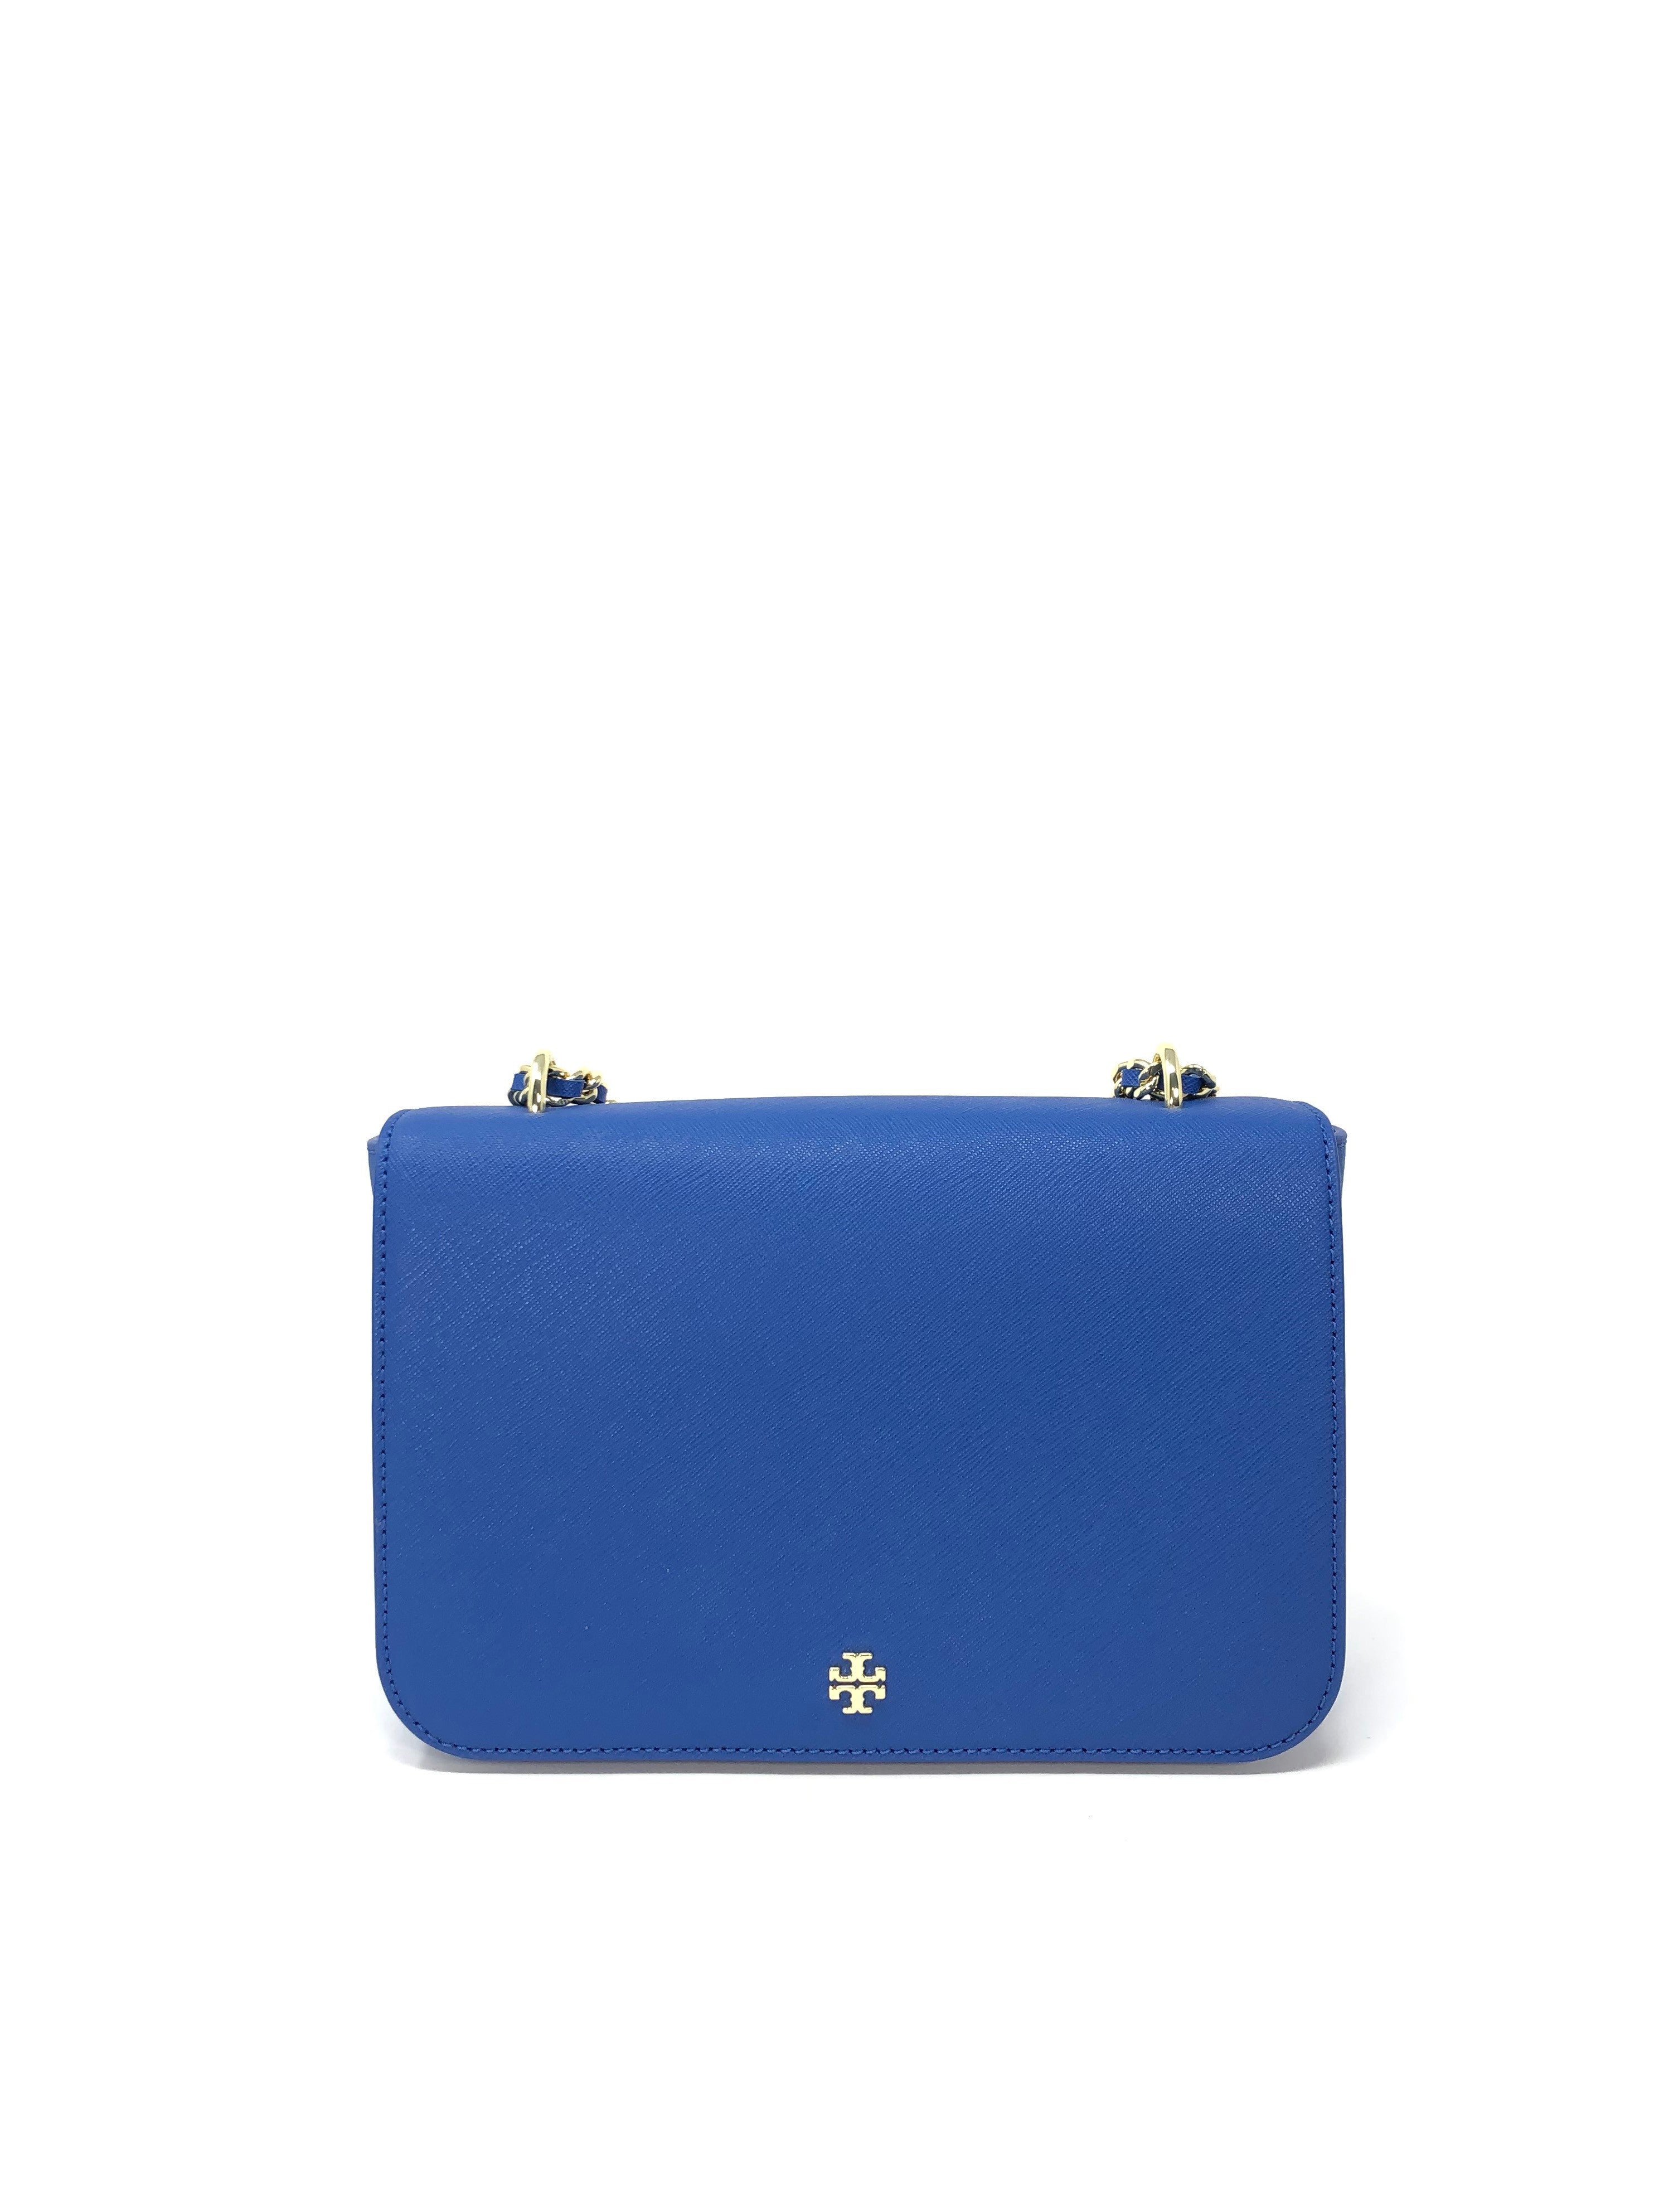 Buy Tory Burch T Monogram Tote Bag | Navy Blue Color Women | AJIO LUXE